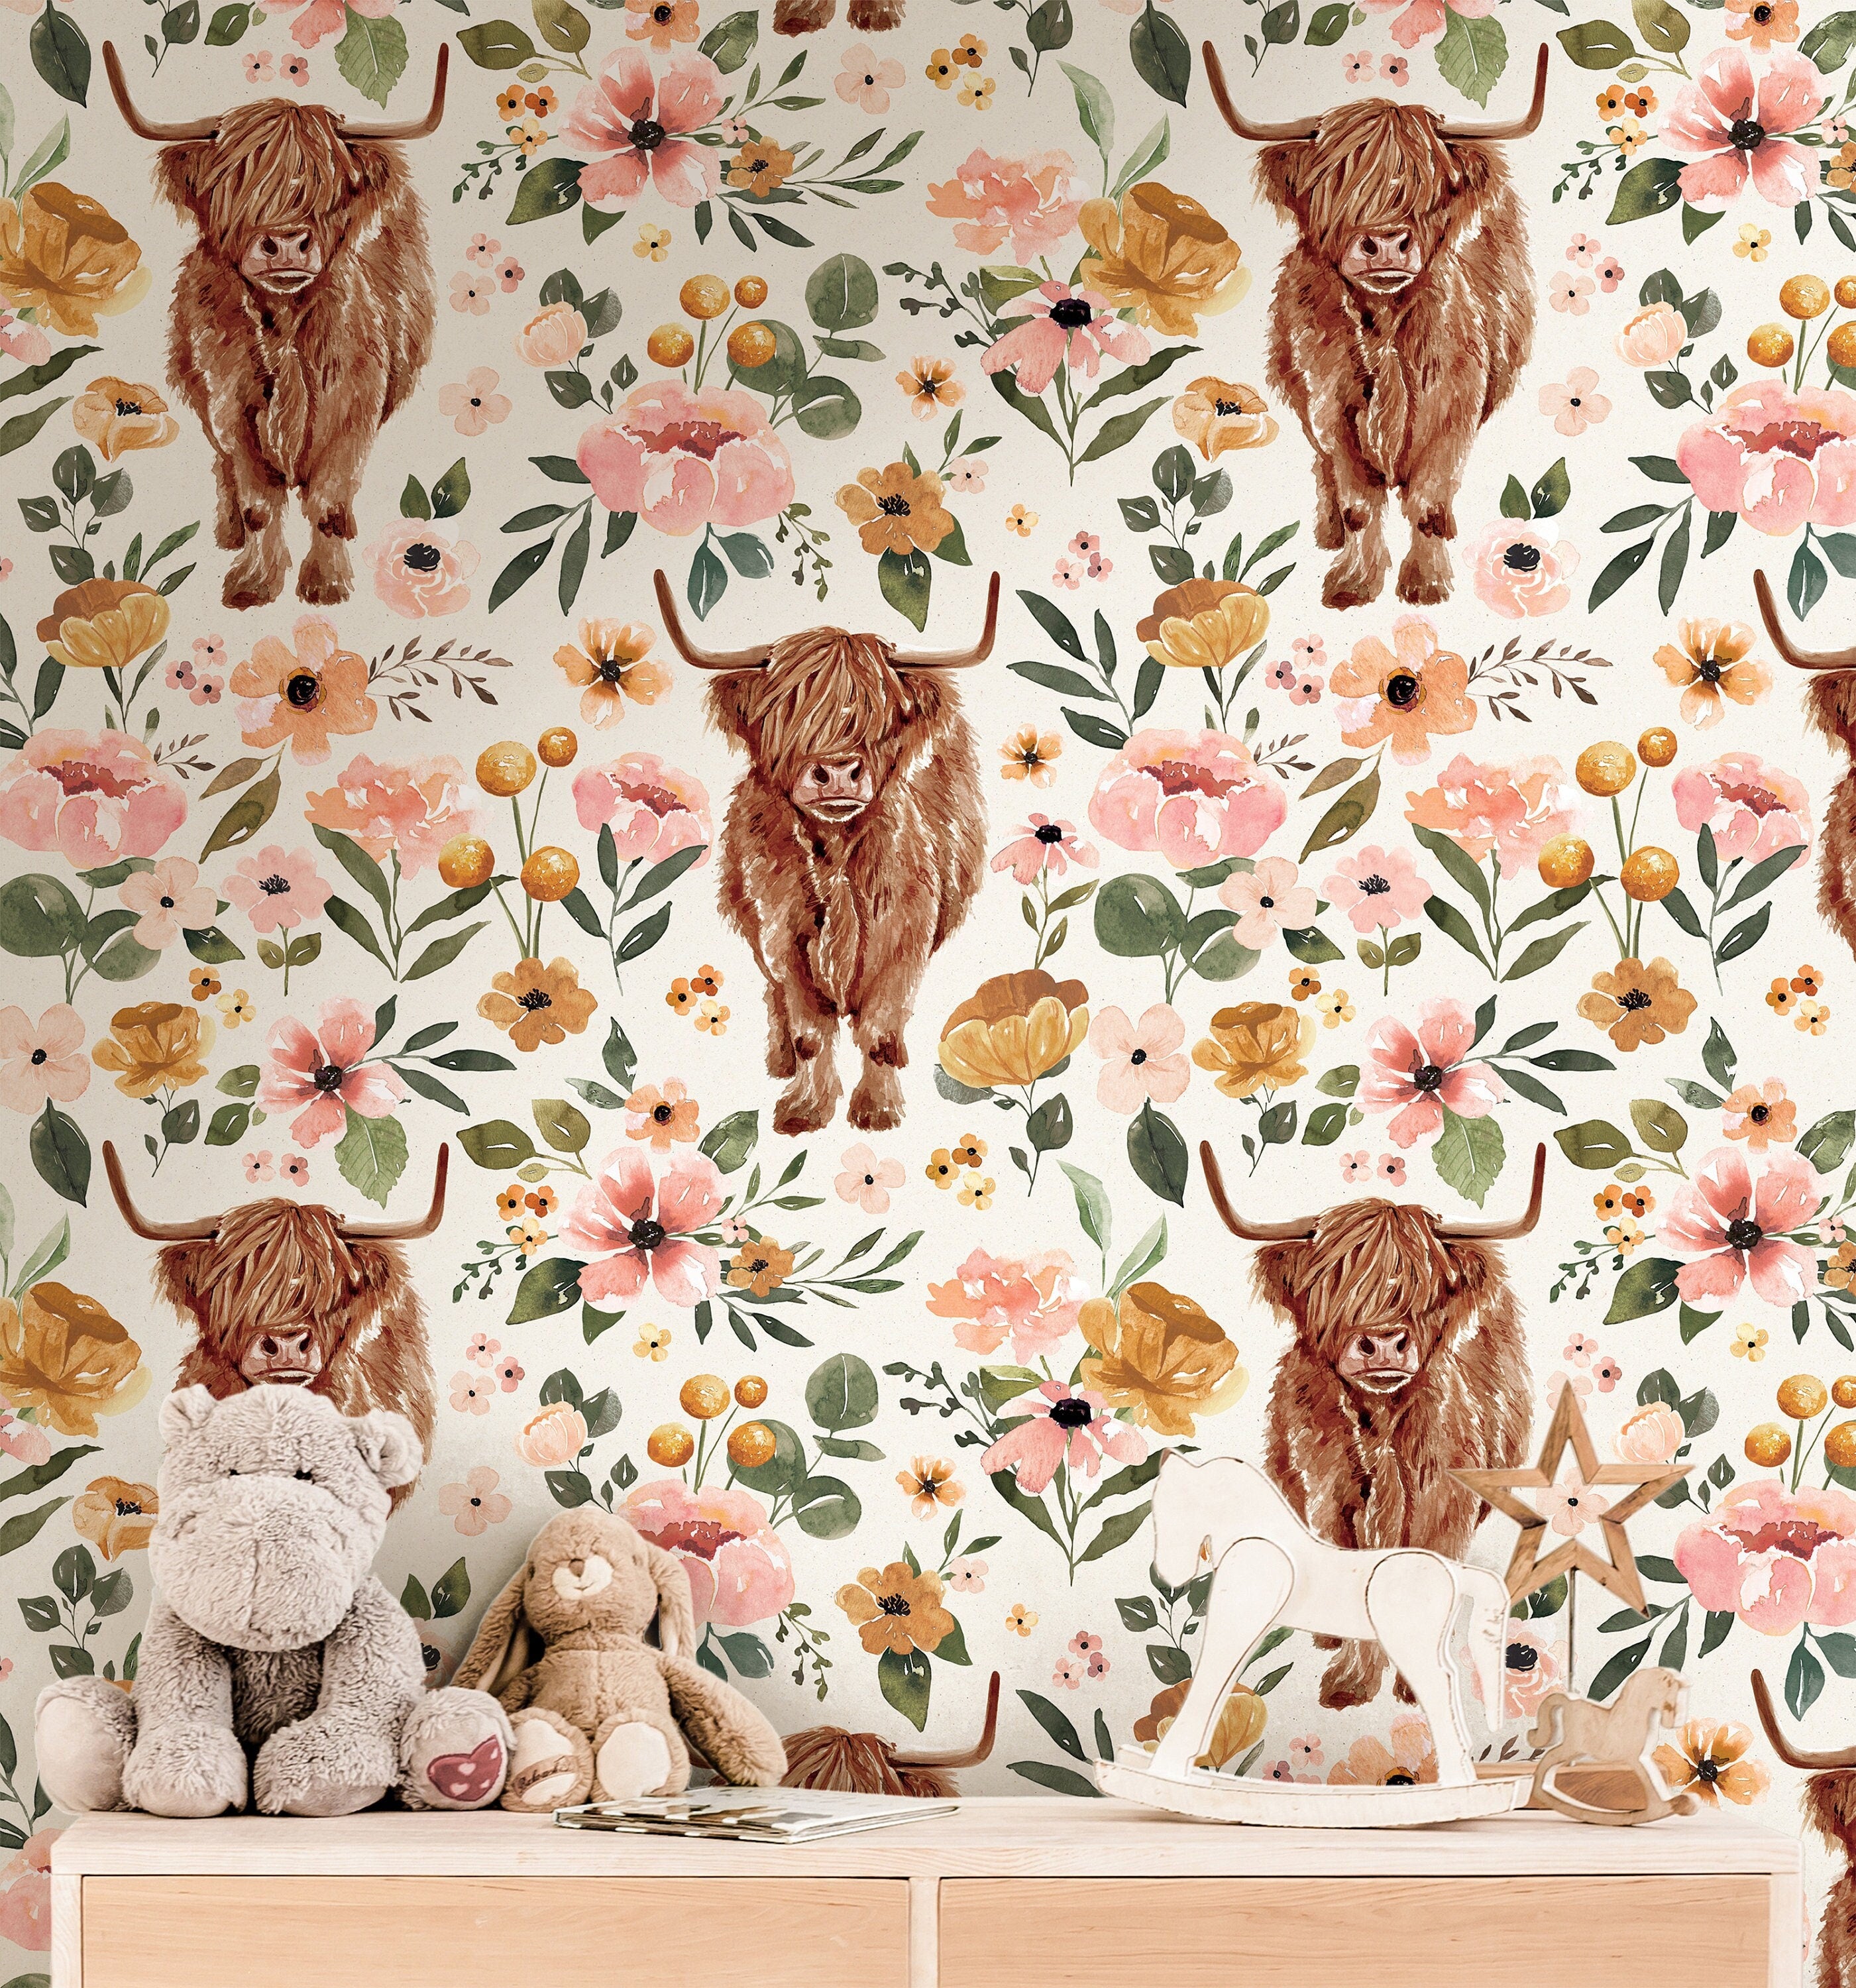 Highland Cow Floral Girls Wallpaper, Girls Nursery Wallpaper, Kids  Wallpaper, Childrens Wallpaper, Peel Stick Removable Wallpaper